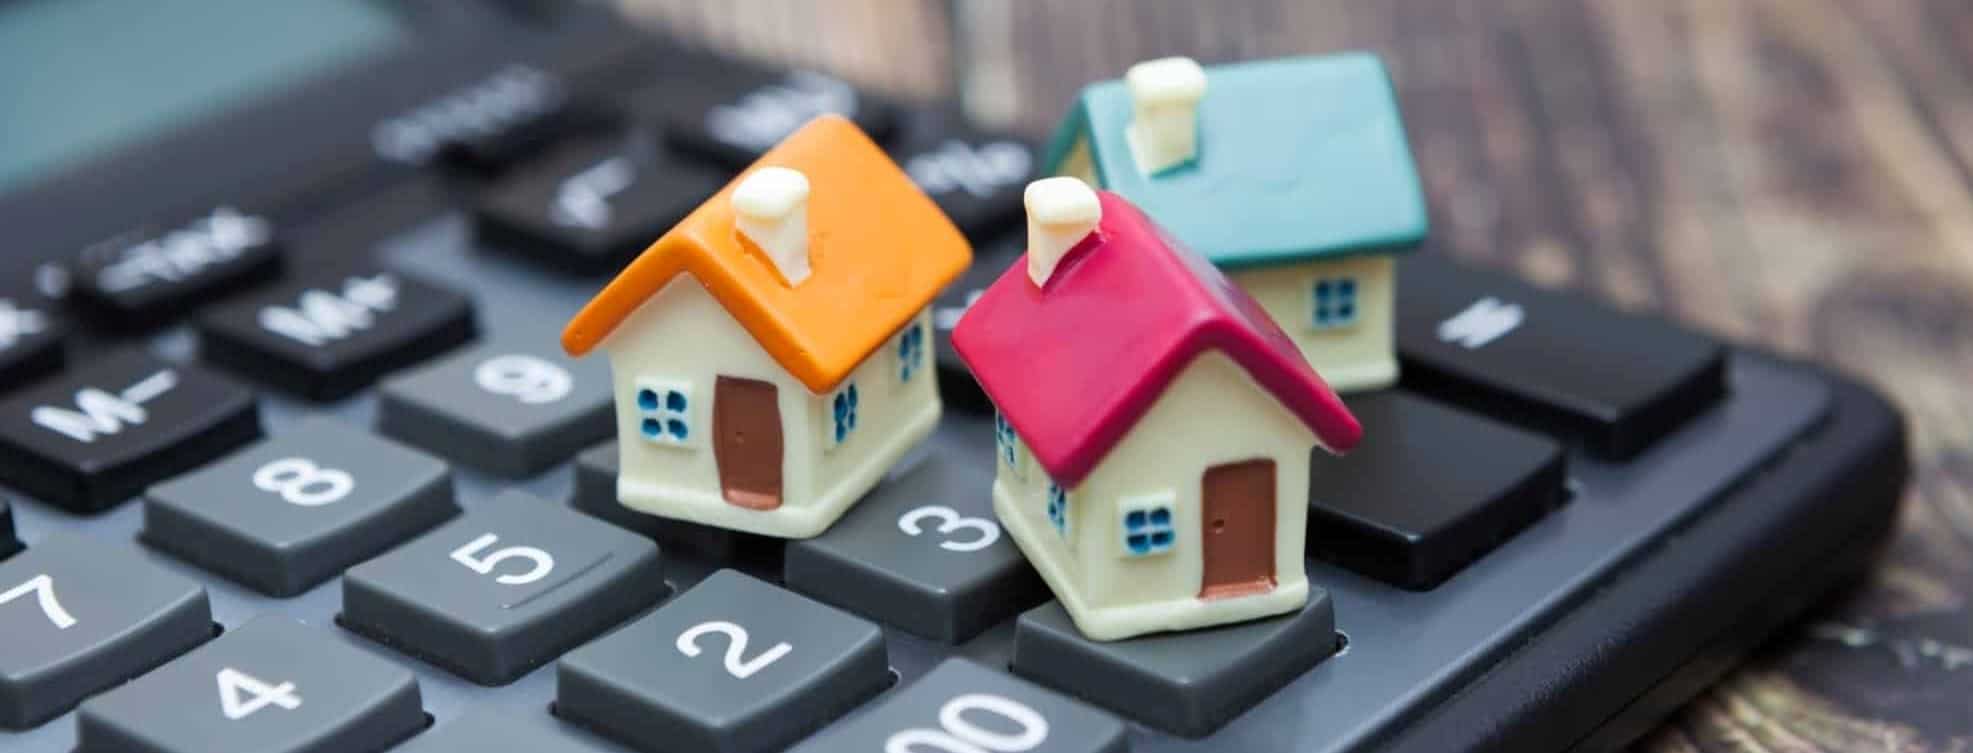 miniature house figures on top of a calculator